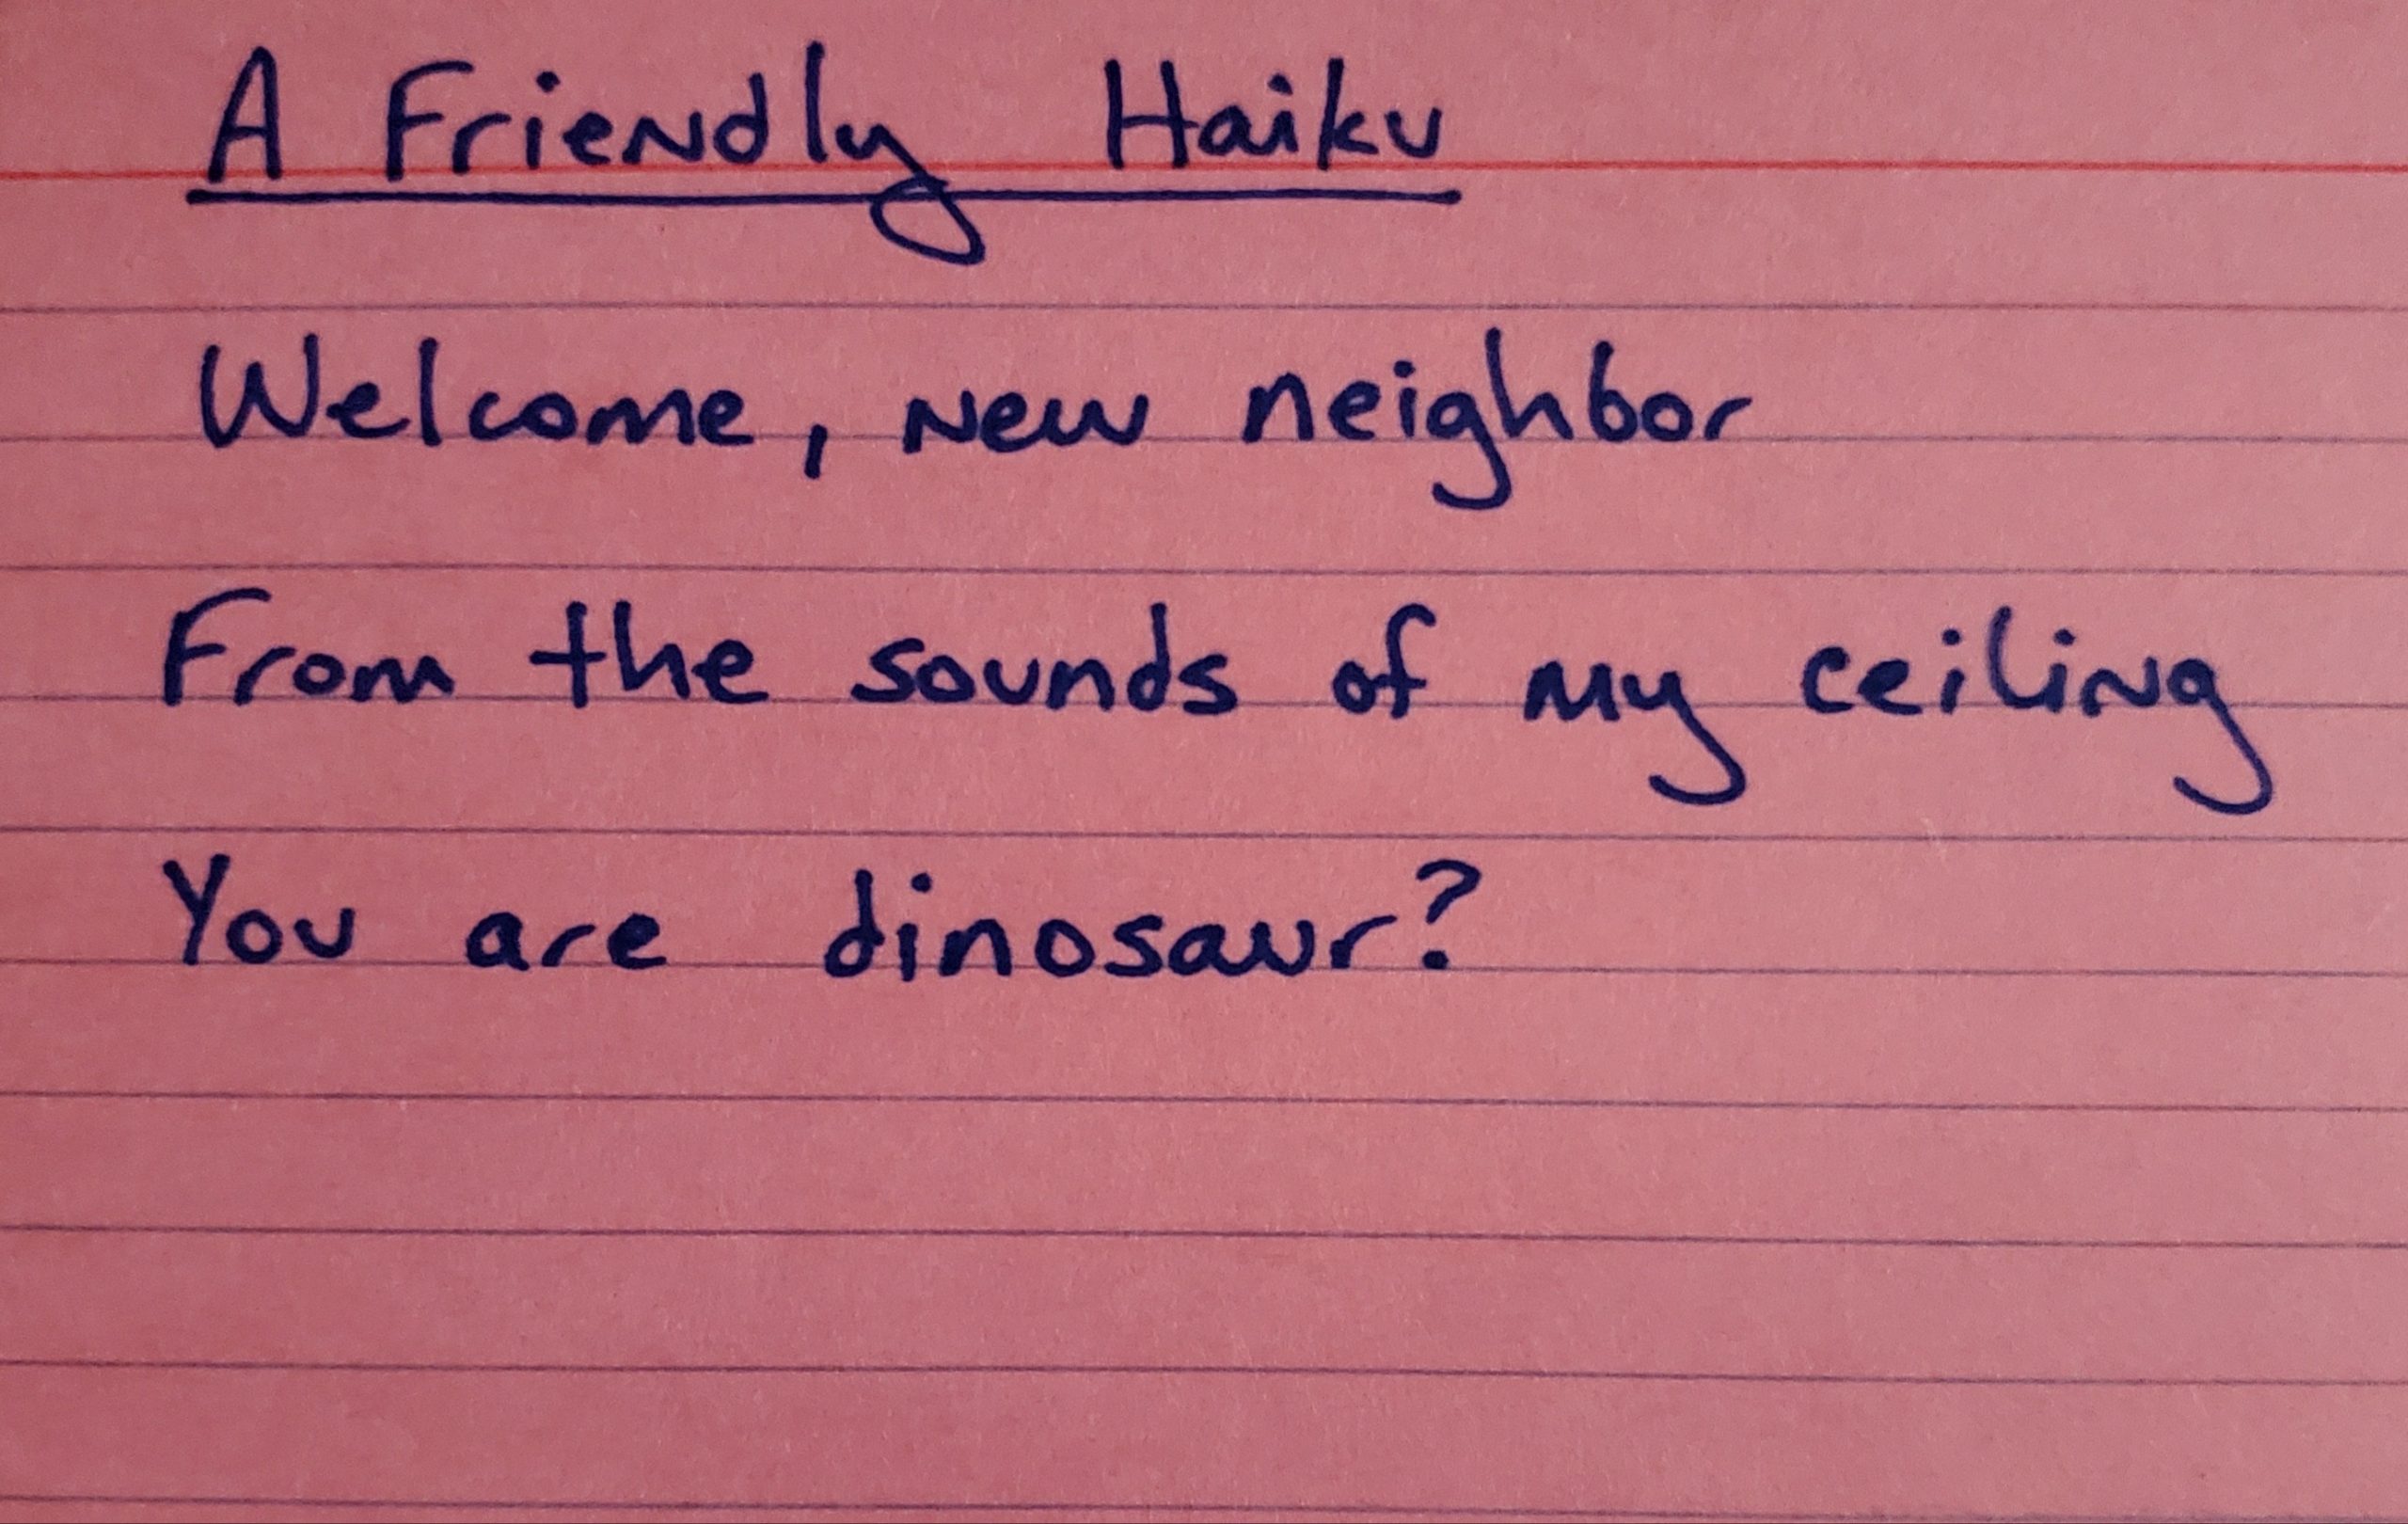 Friendly Haiku left by neighbor regarding private noise nuisance